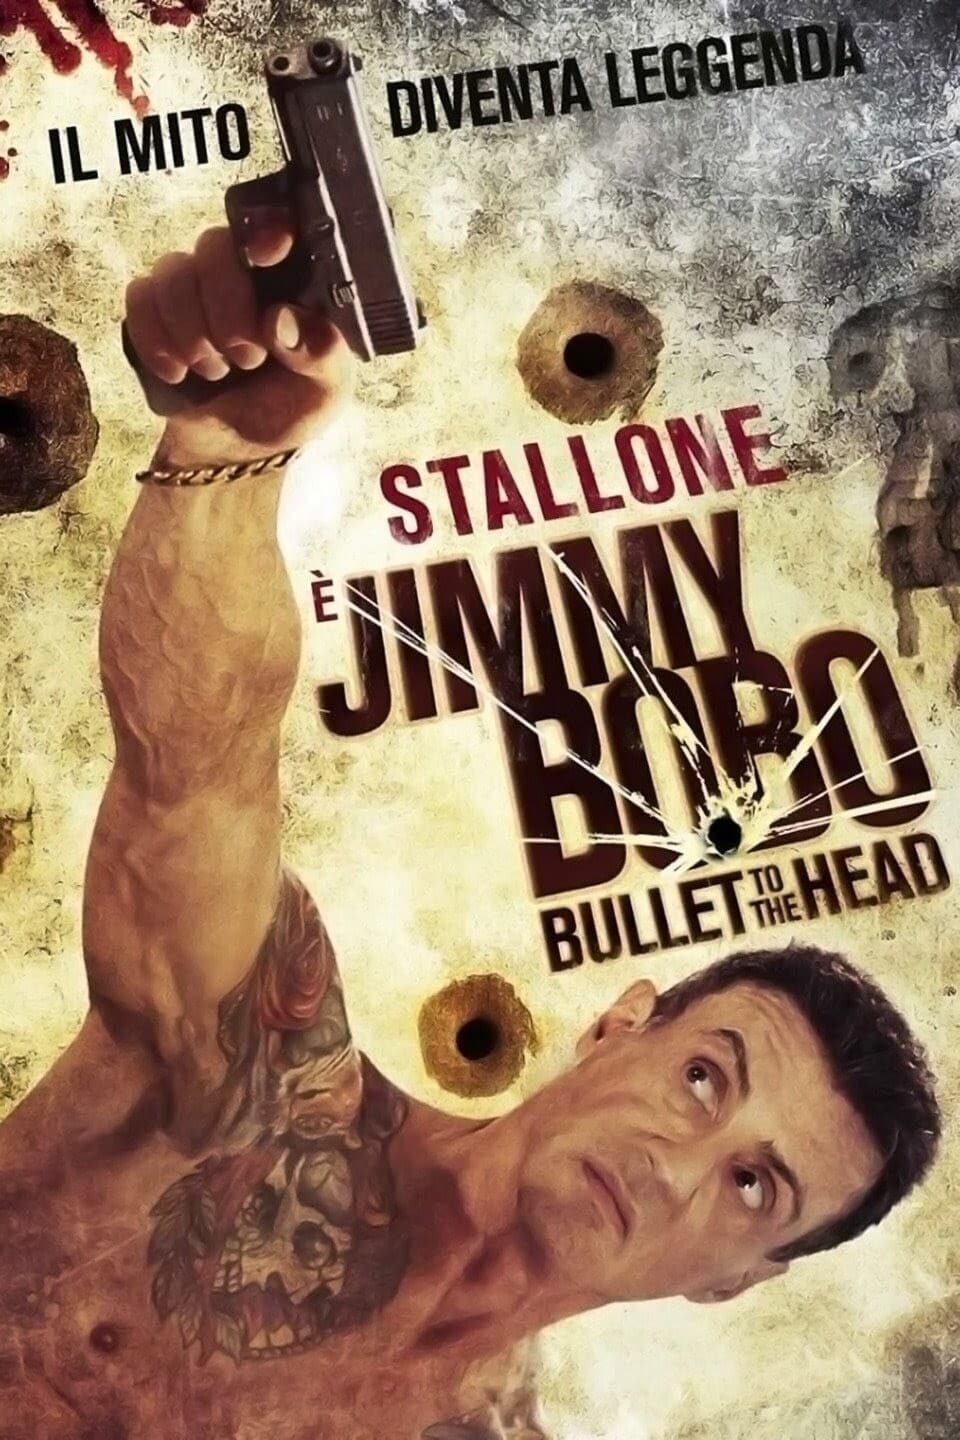 Jimmy Bobo – Bullet to the Head [HD] (2013)